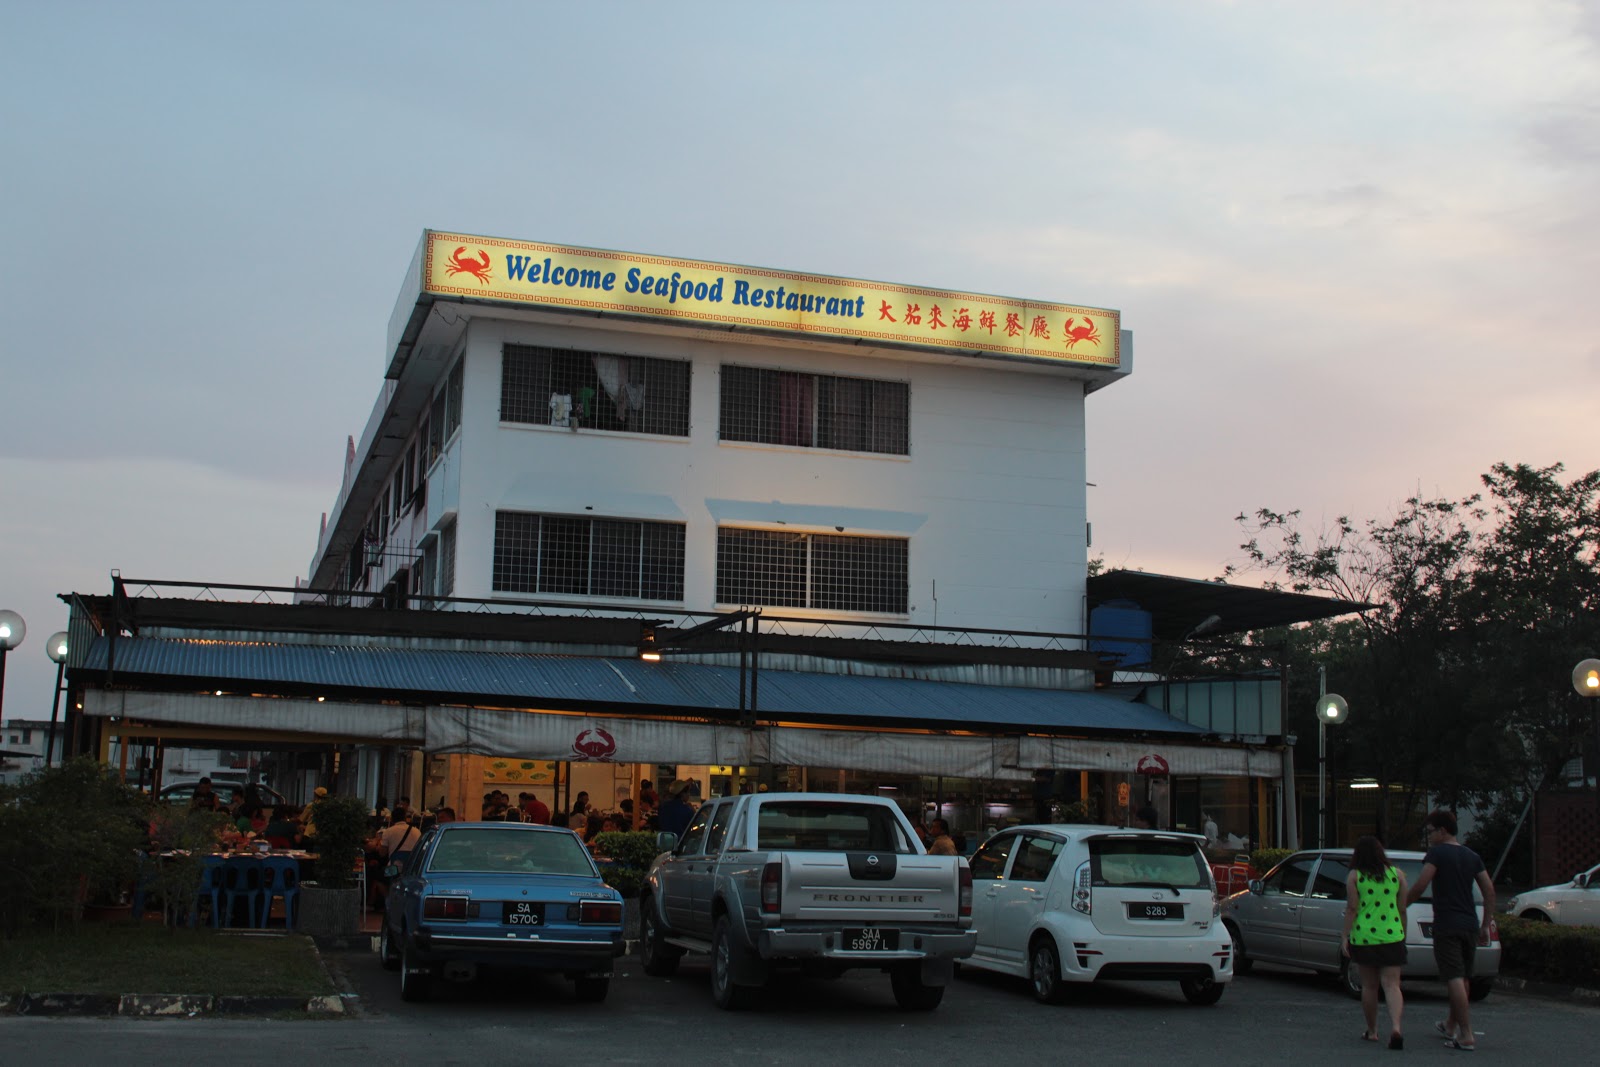 Welcome Seafood Restaurant, Kota Kinabalu